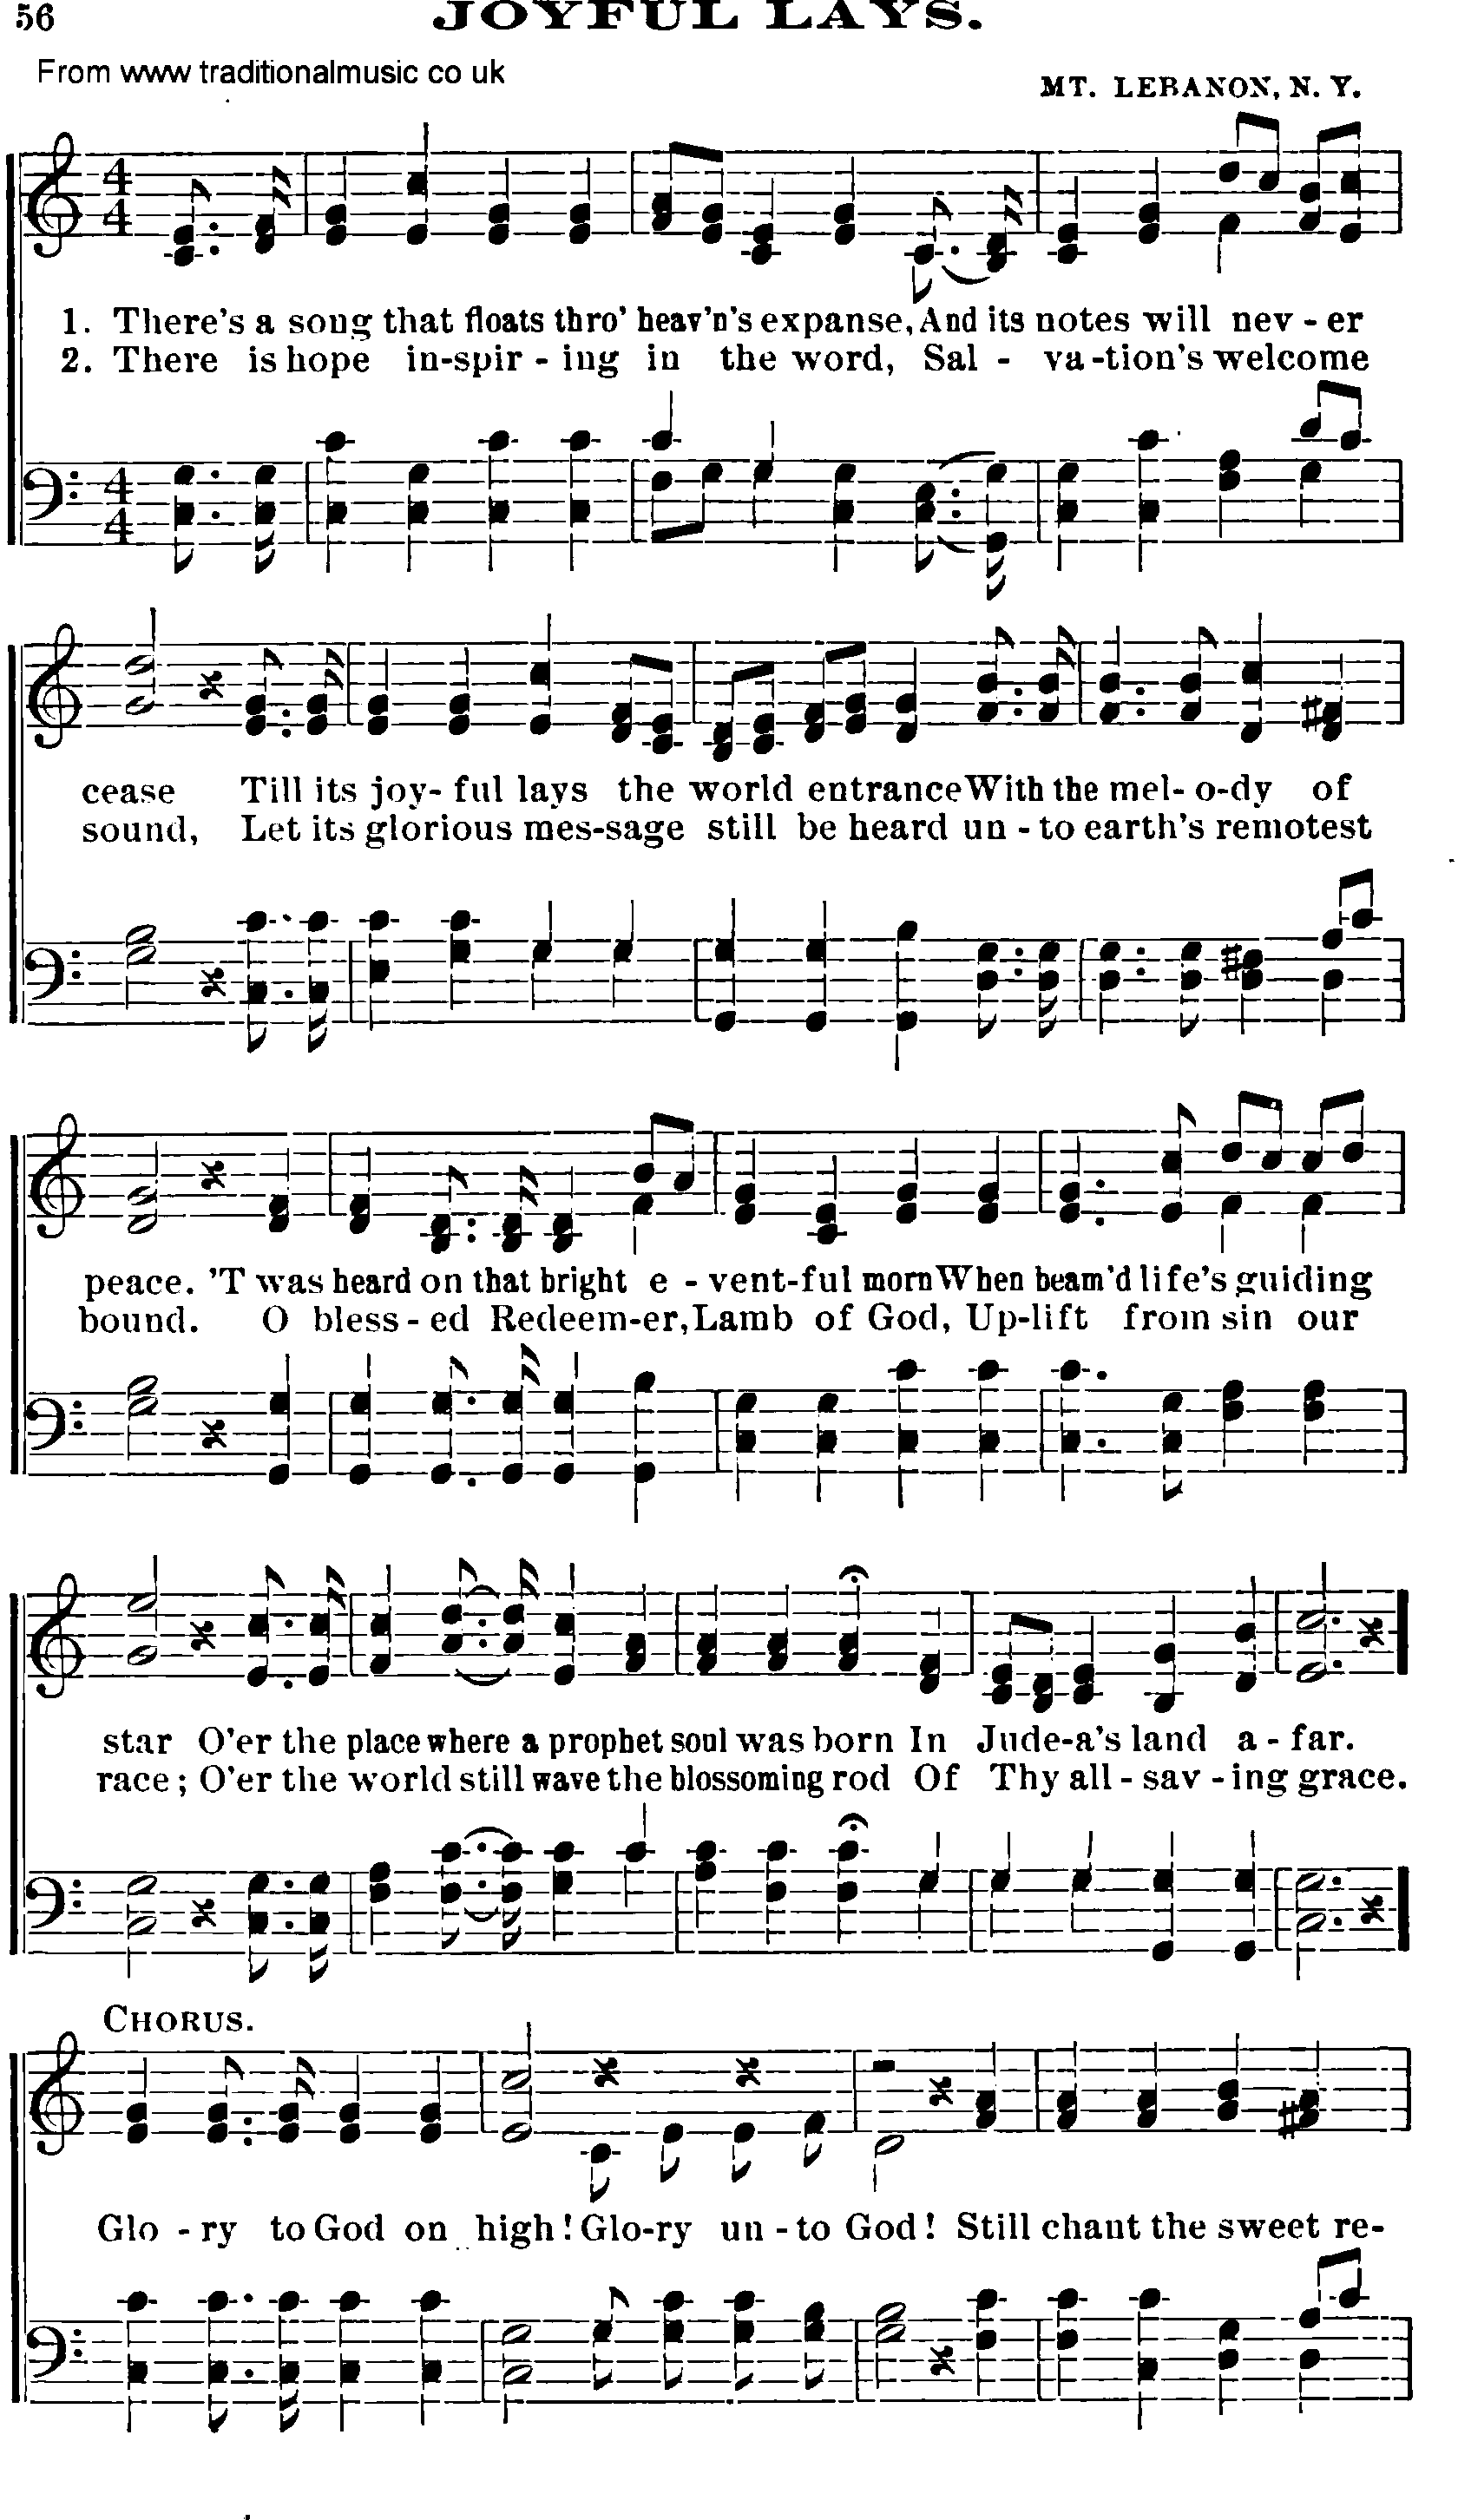 Shaker Music collection, Hymn: joyful lays, sheetmusic and PDF